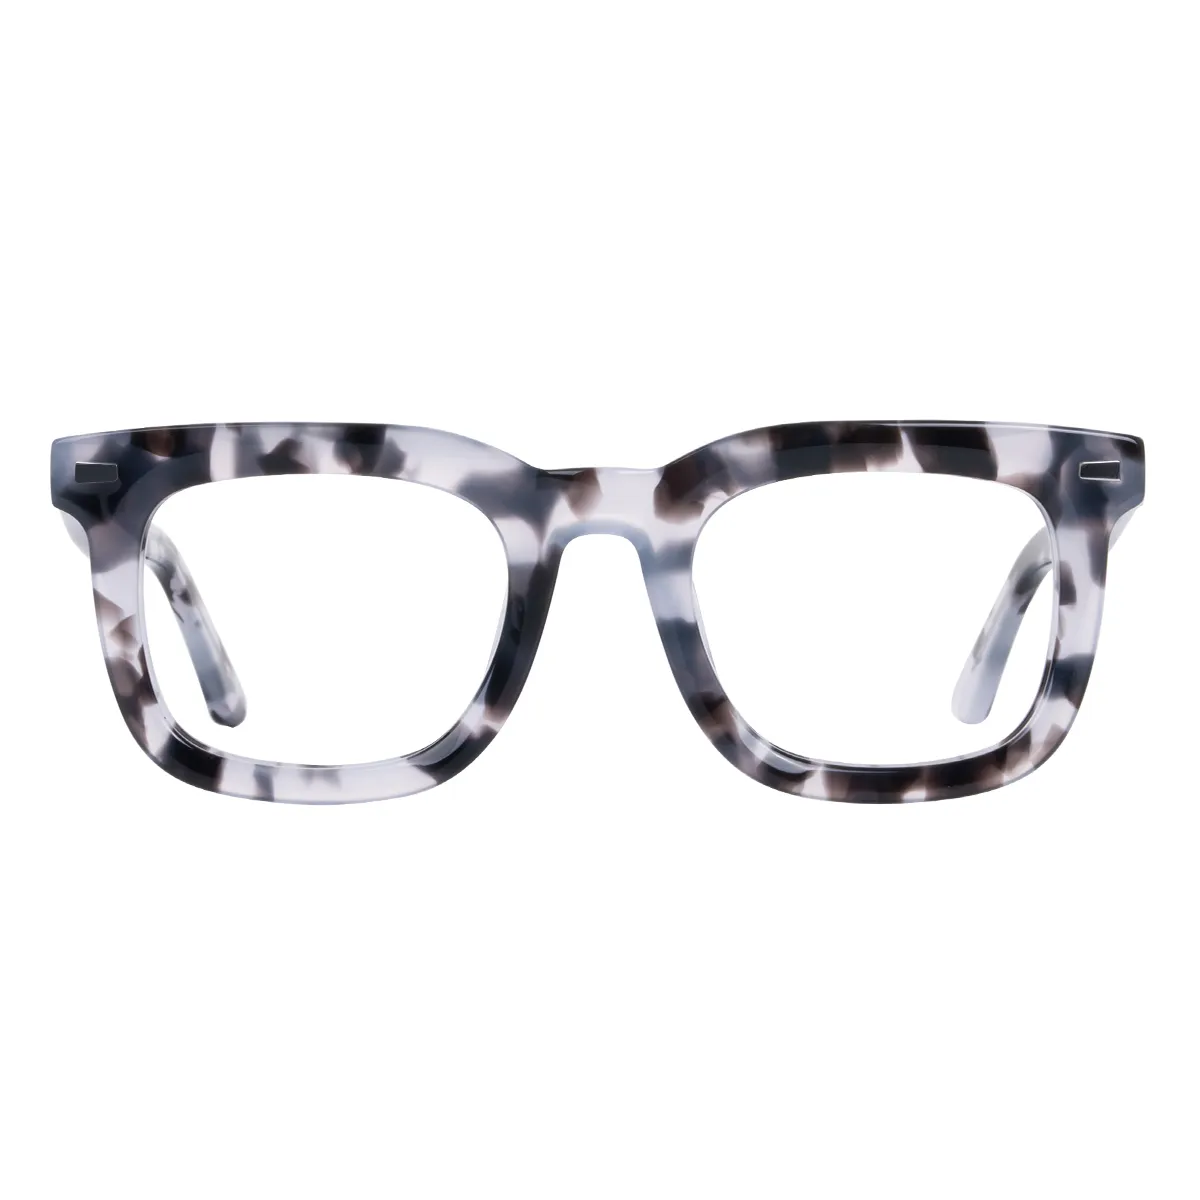 Feb - Square White-Tortoiseshell Glasses for Men & Women